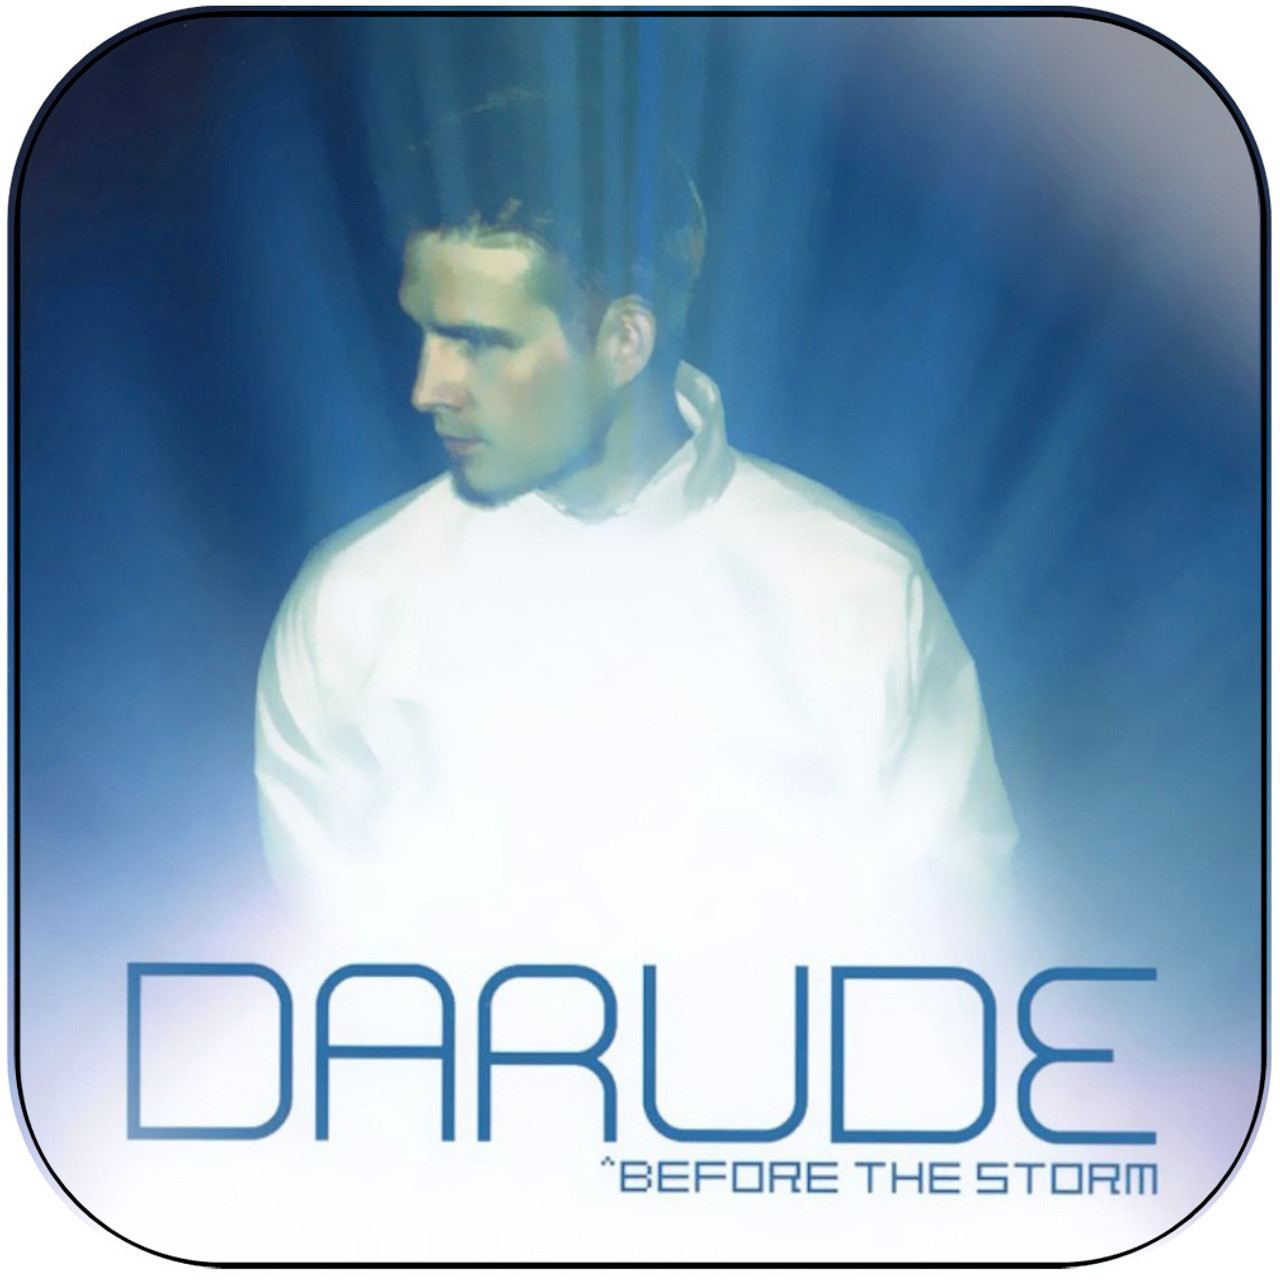 Darude - Before The Storm Album Cover Sticker